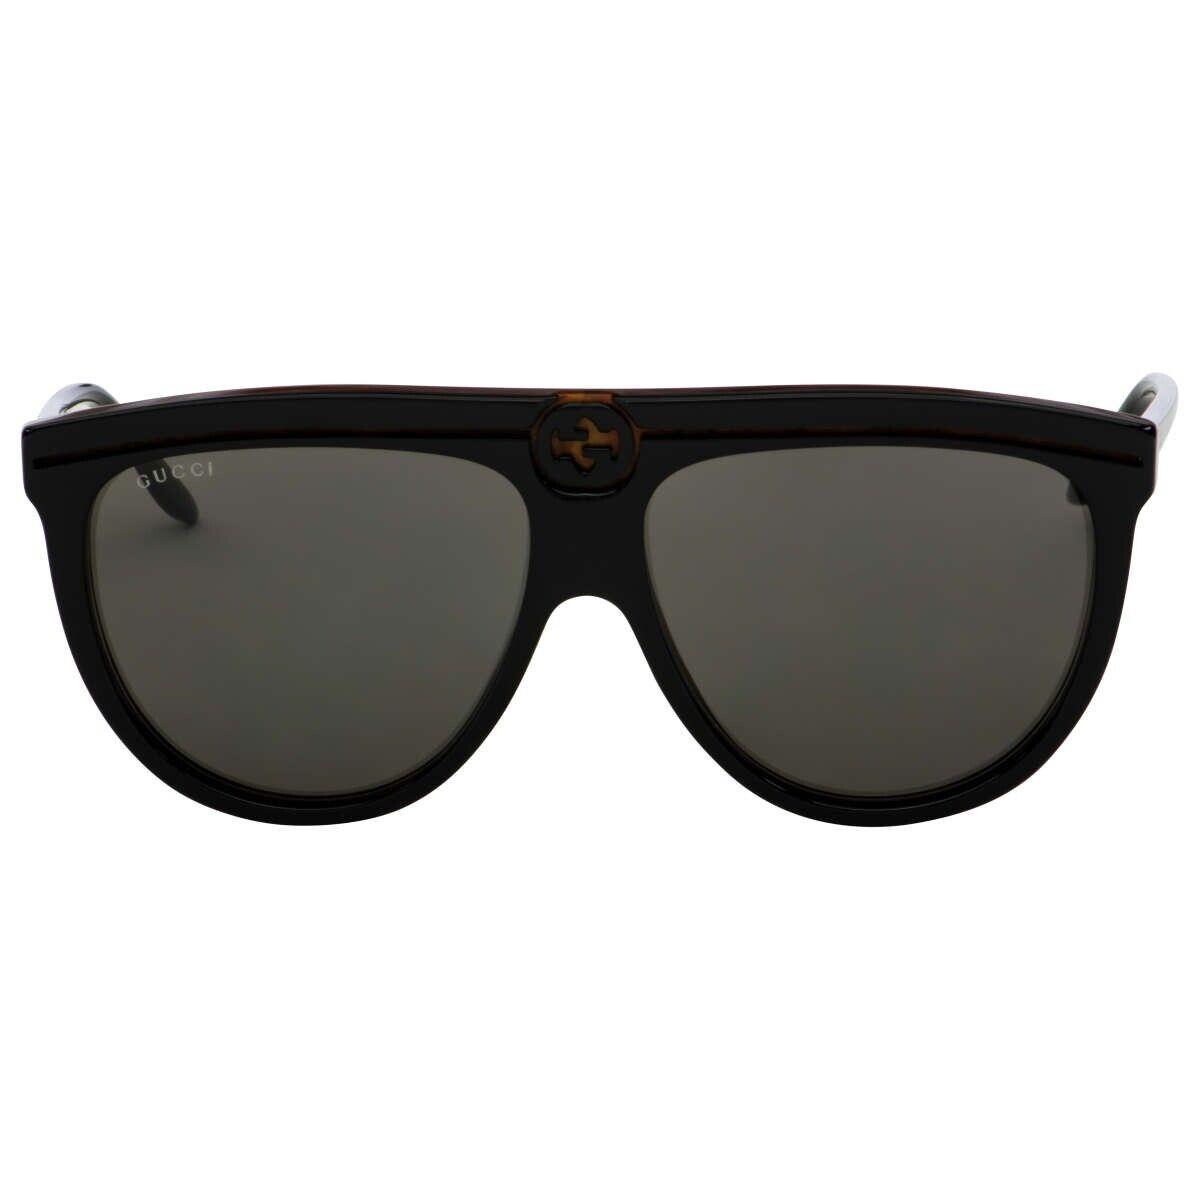 Gucci Sunglasses GG0732S 001 Black/grey Lens